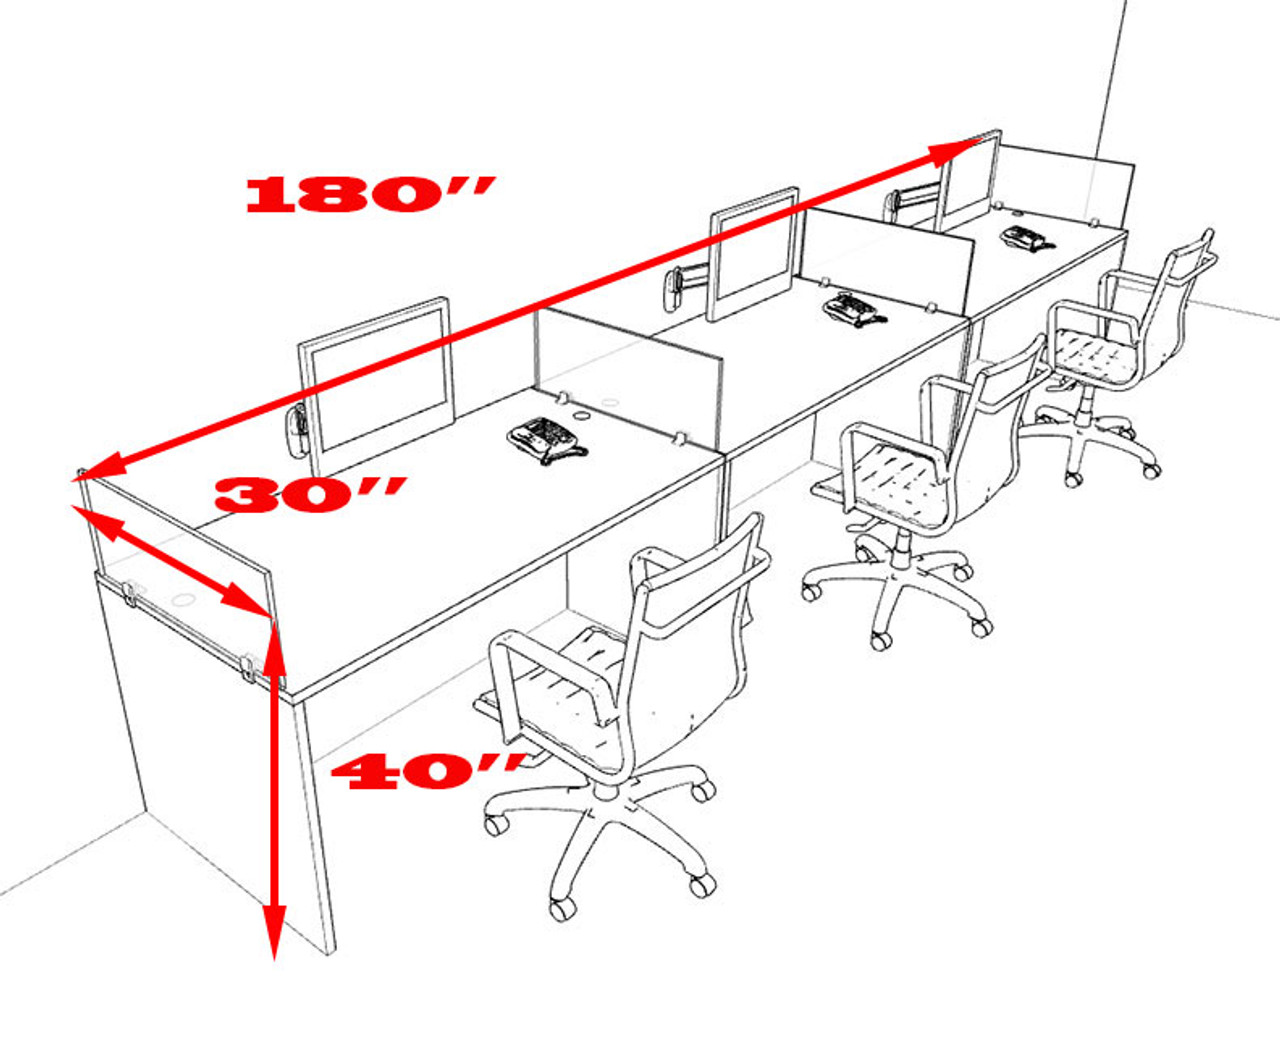 Three Person Modern Accoustic Divider Office Workstation Desk Set, #OT-SUL-SPRG7